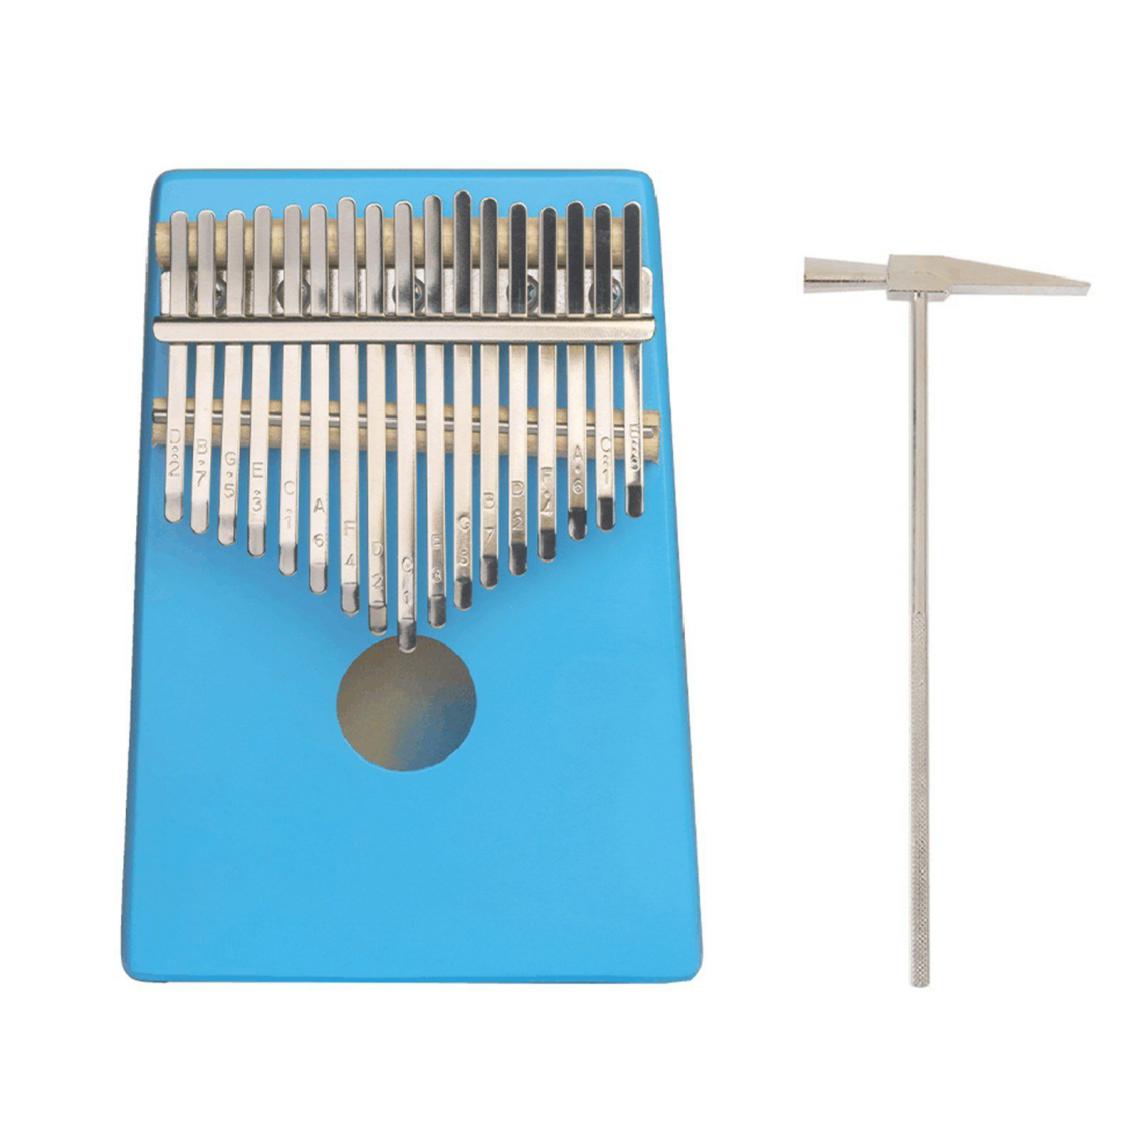 Justgreenbox - 17 Touches C-Tune Pouce Piano Kalimba Portable Doigt En Bois Massif - Accessoires claviers